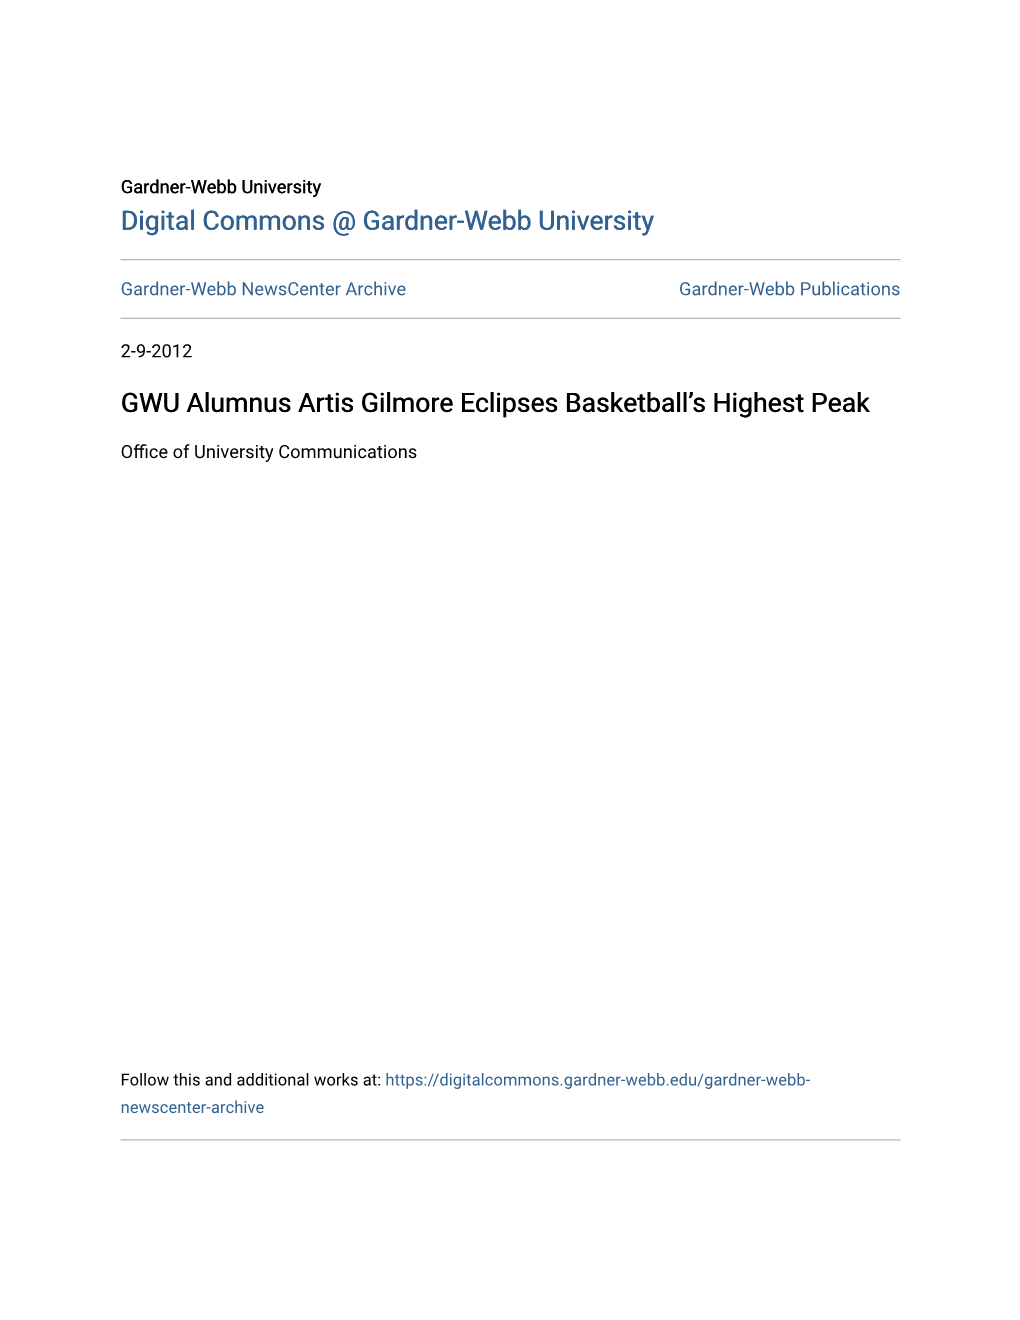 GWU Alumnus Artis Gilmore Eclipses Basketball's Highest Peak